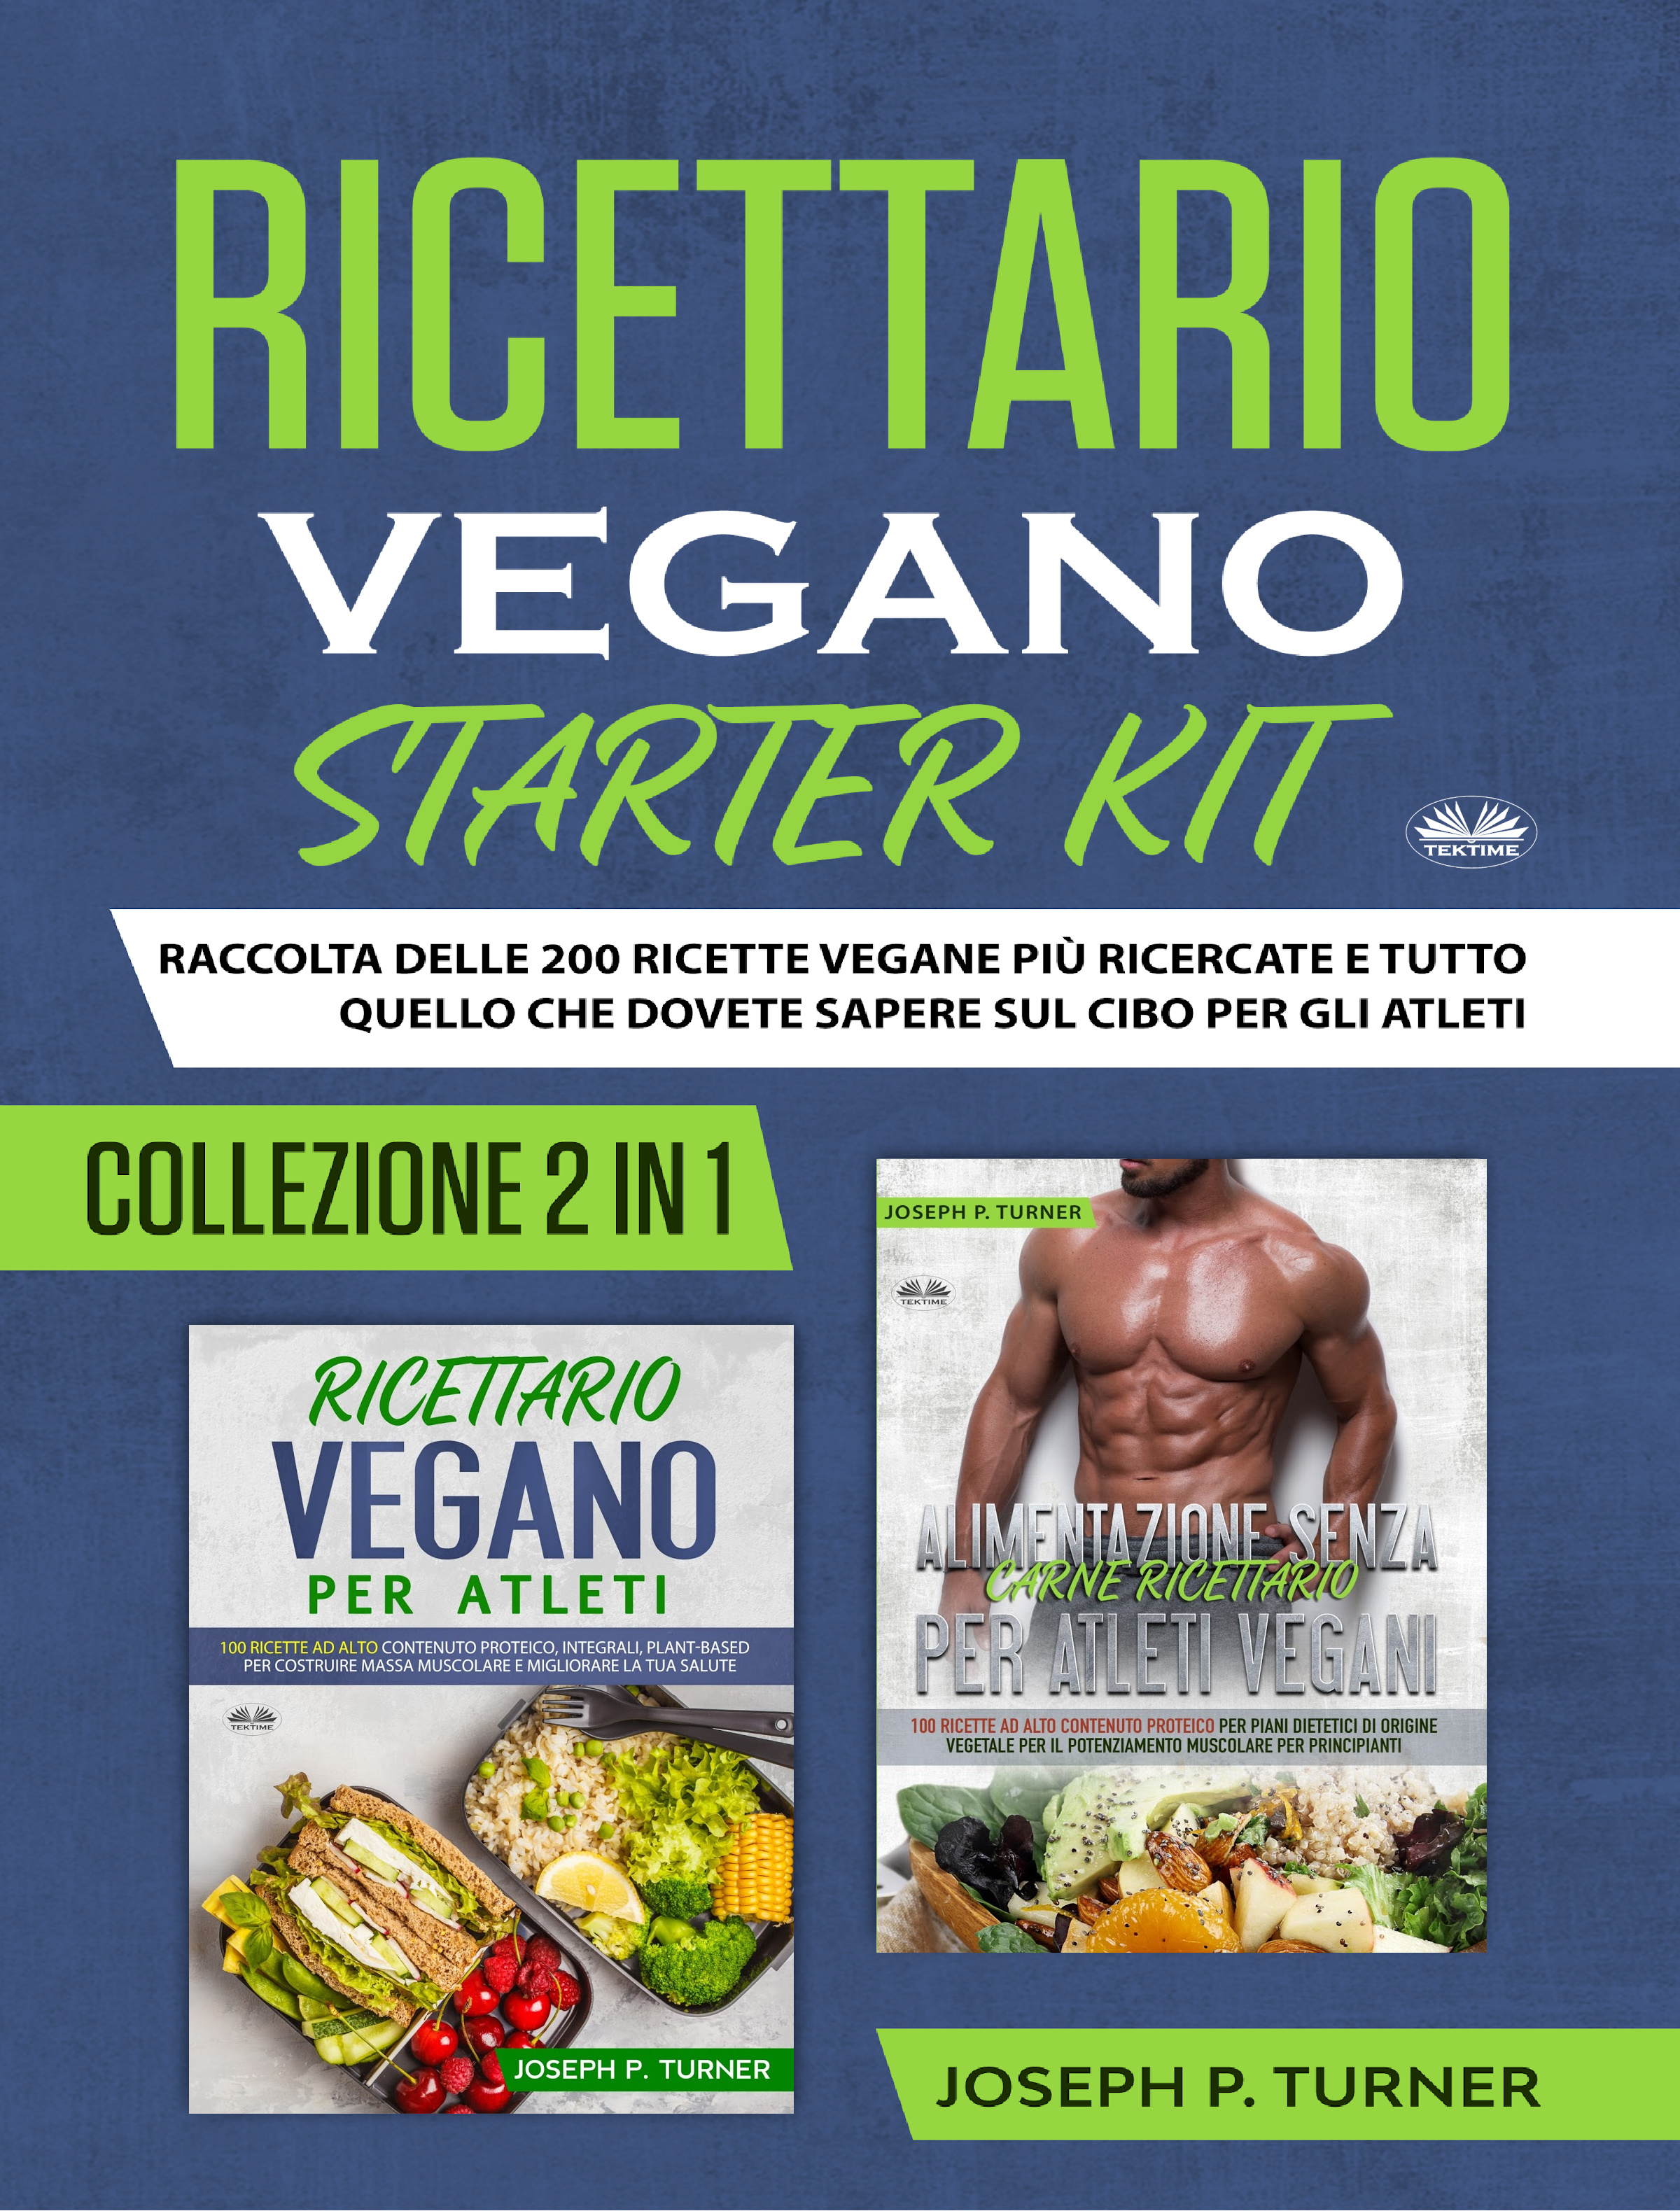 Ricettario Vegano Starter Kit